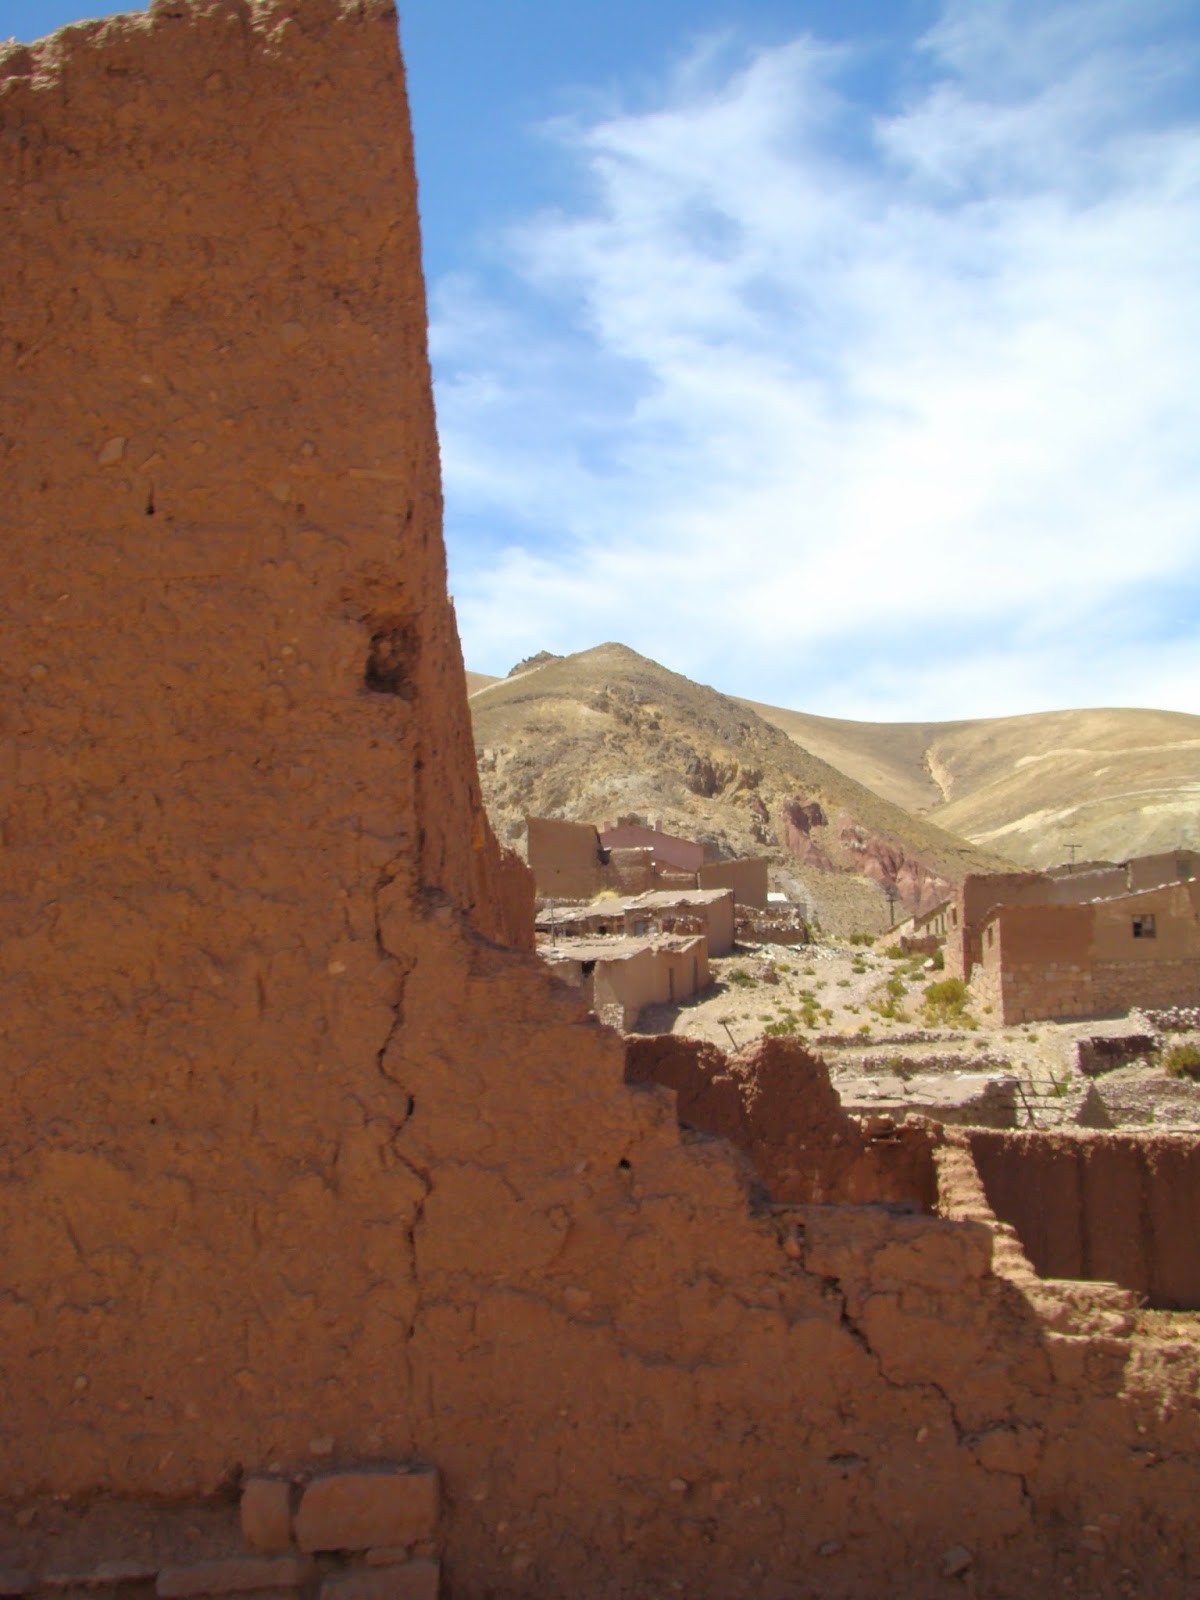 Vilas marrons e paredes de barro, a cara do sul boliviano.